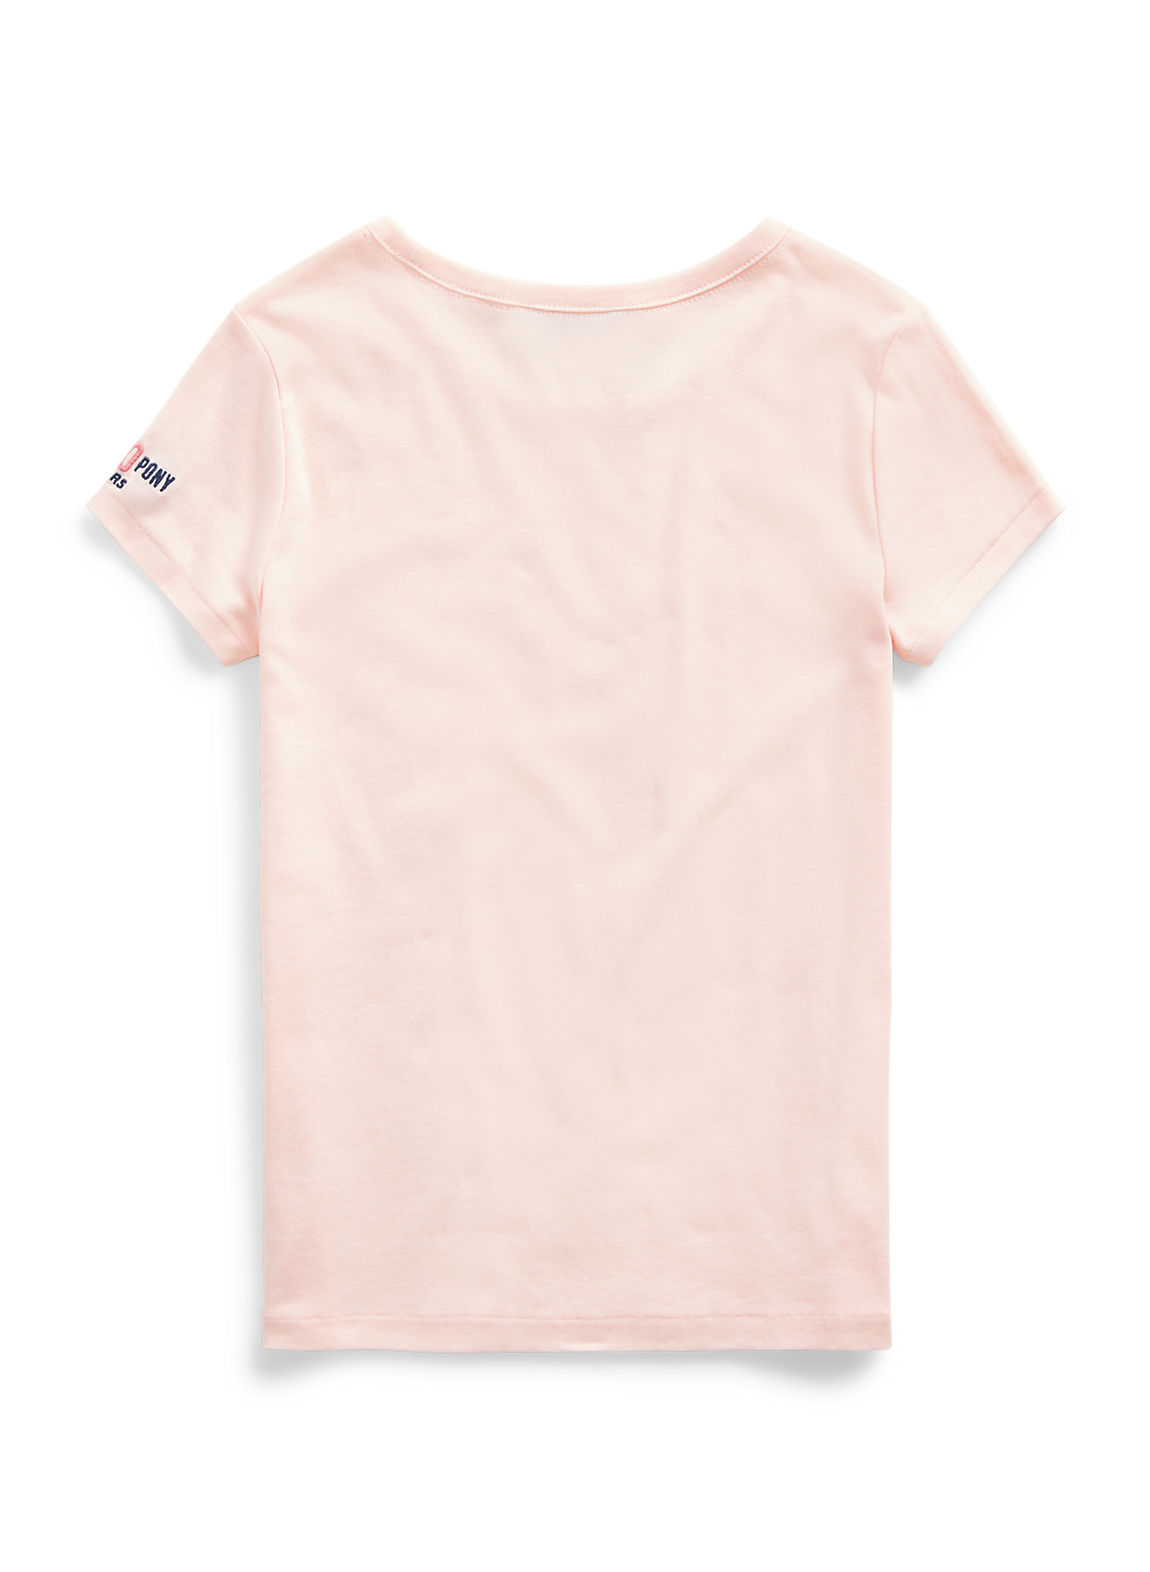 Pink Pony グラフィック Tシャツ